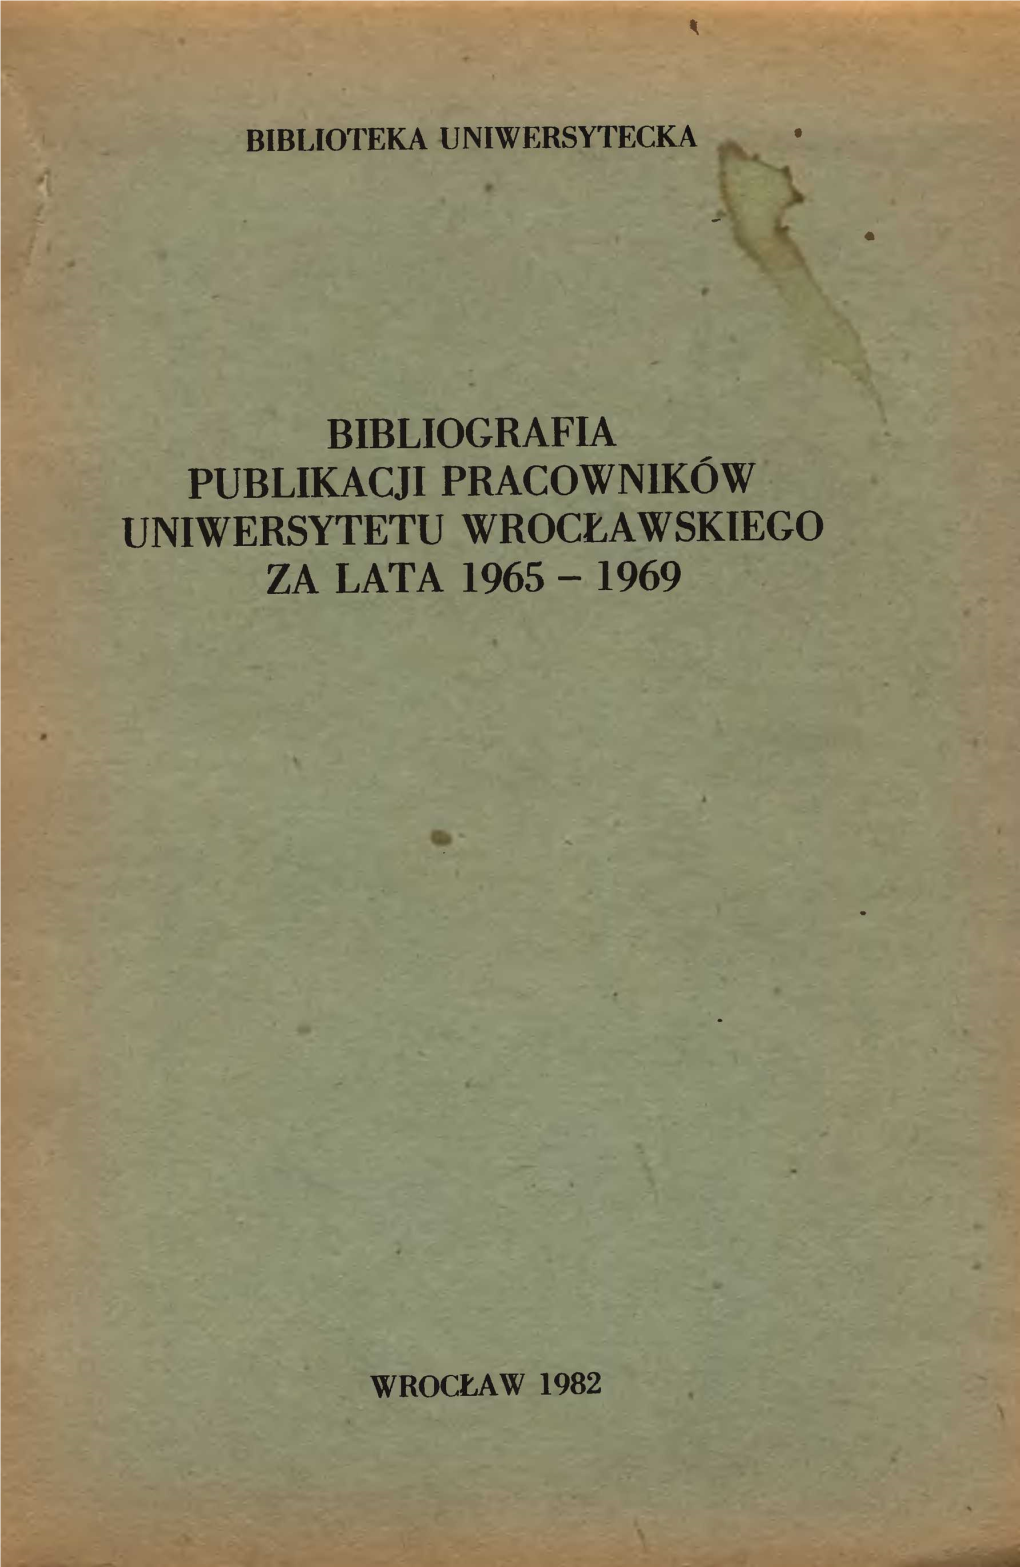 Za Lata 1965 - 1969